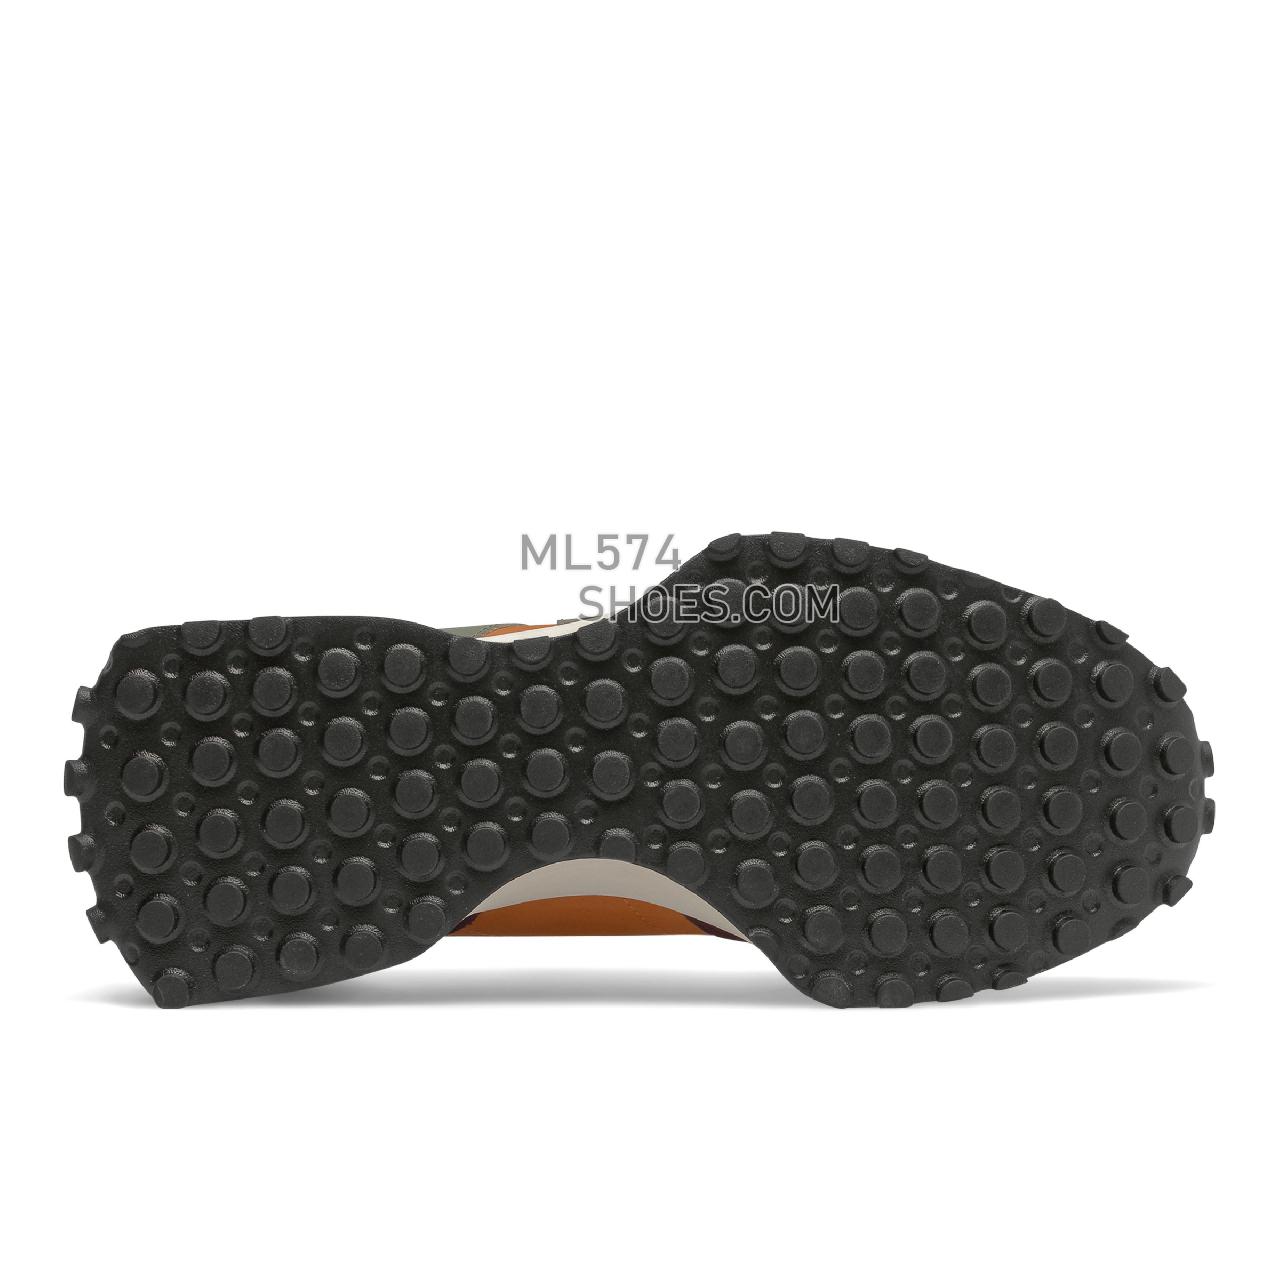 New Balance 327 - Unisex Men's Women's Sport Style Sneakers - Madras Orange with Black - MS327LY1